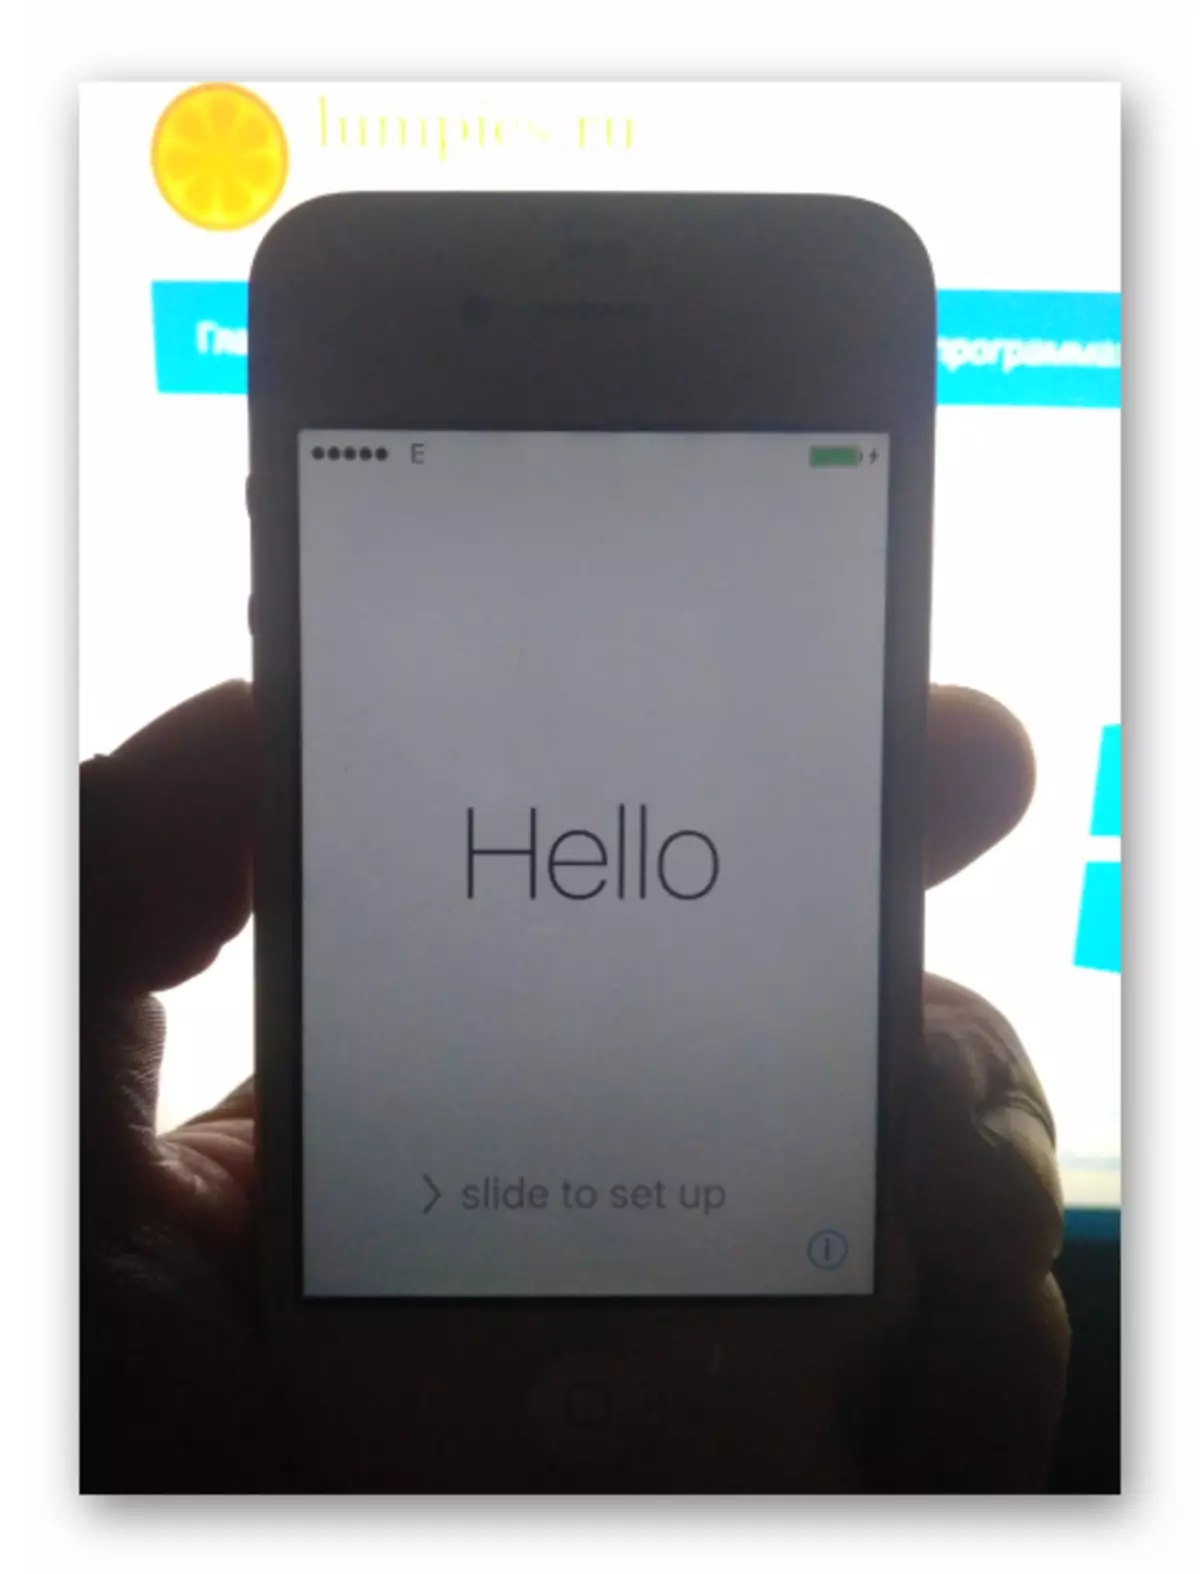 Apple iPhone 4S запуск iOS після прошивки апарату через iTunes